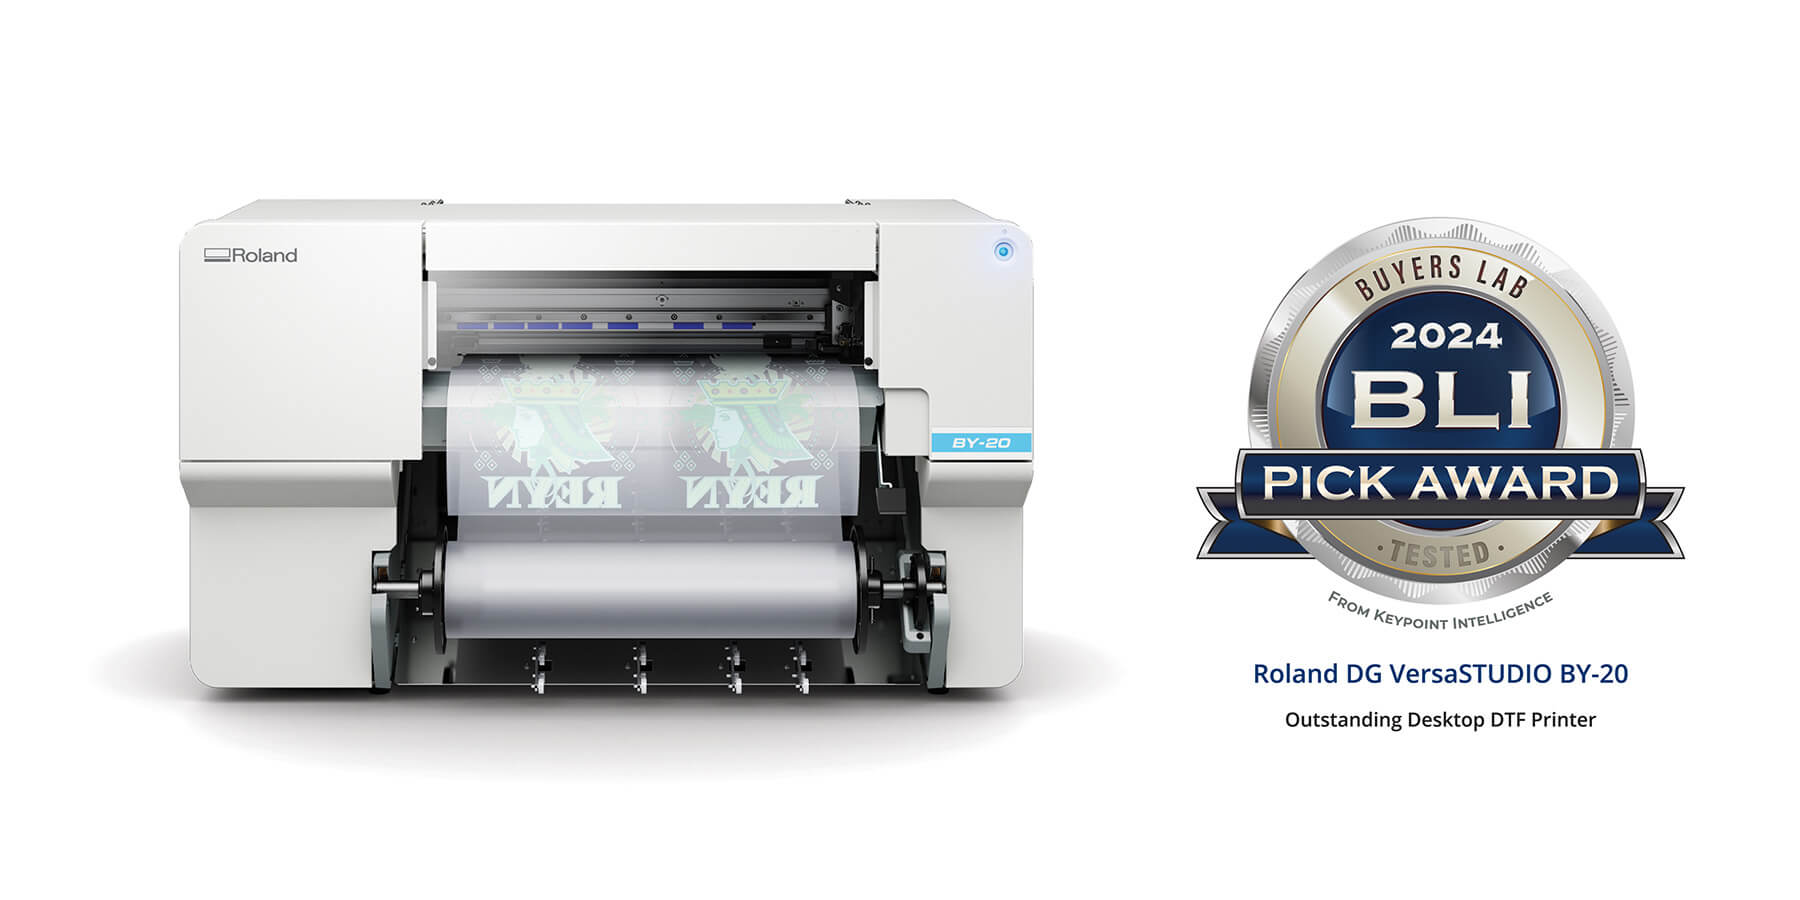 Image of Roland DG's new VersaSTUDIO BY-20 direct-to-film printer with BLI 2024 Pick Award logo